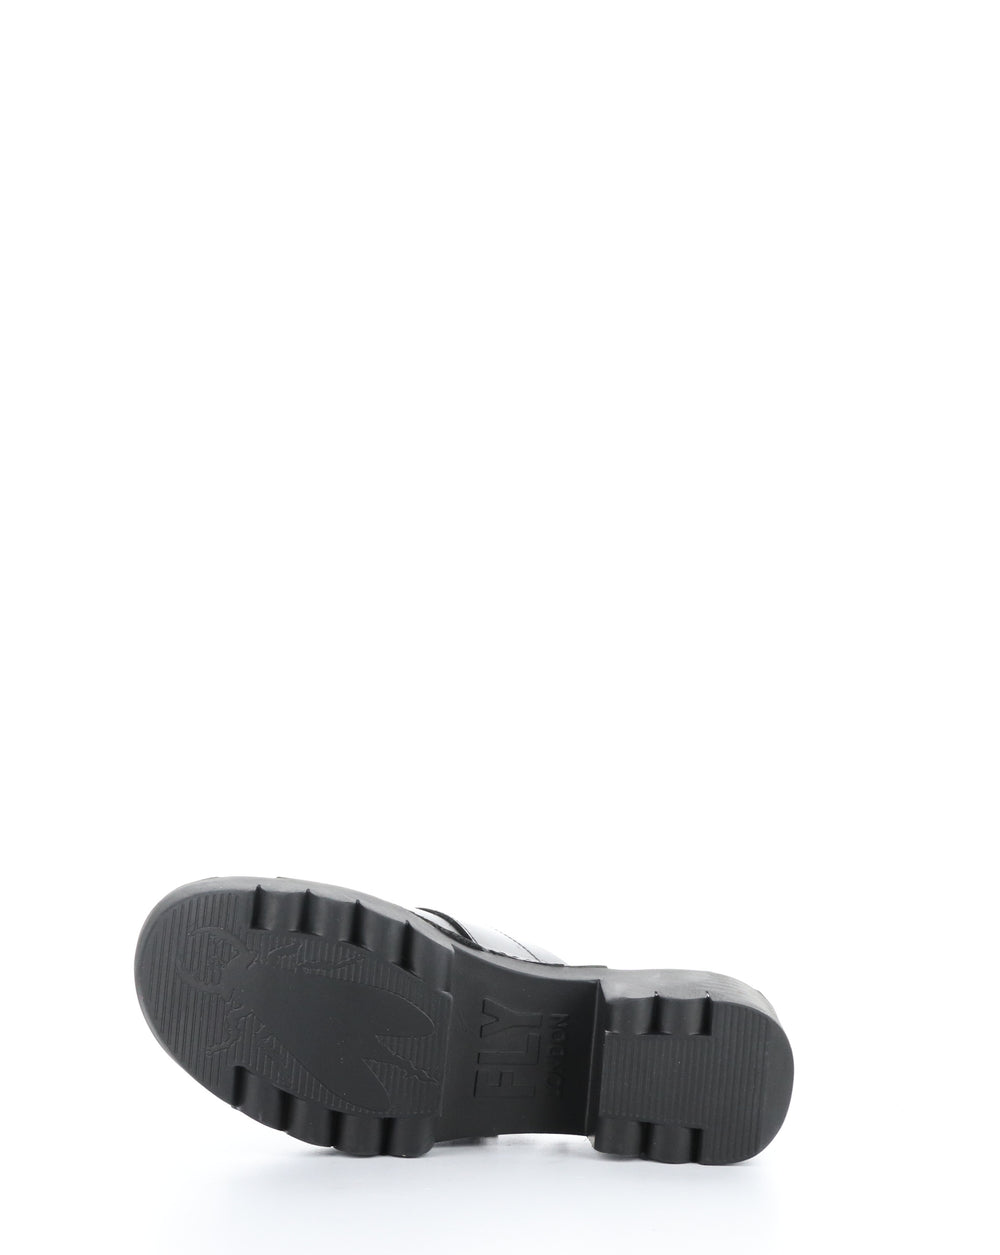 EPLE519FLY 000 BLACK Slip-on Sandals